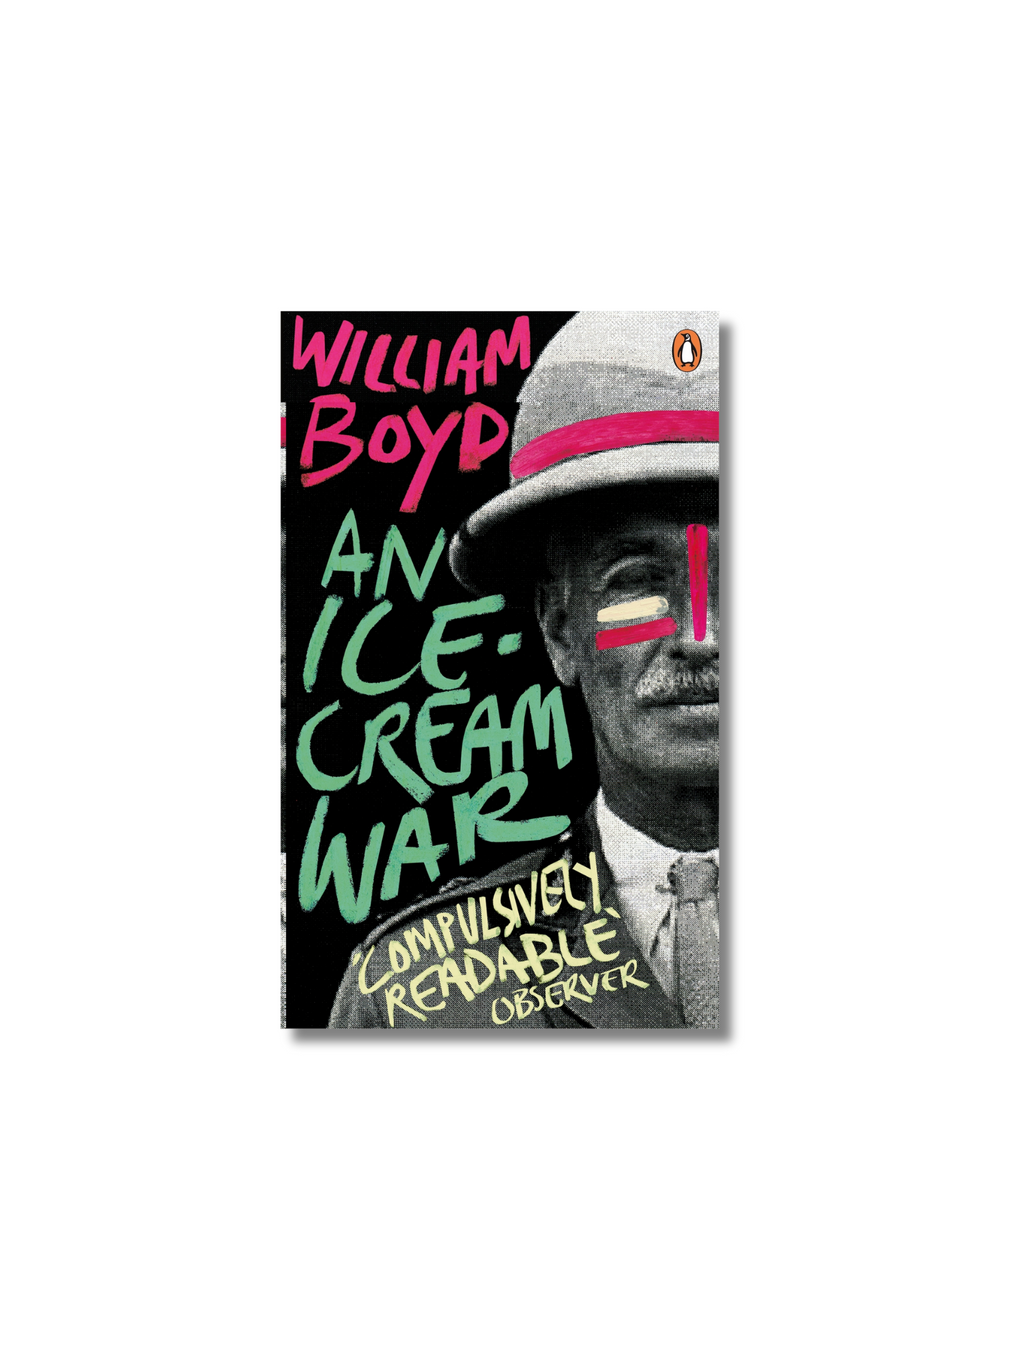 An Ice-cream War: William Boyd